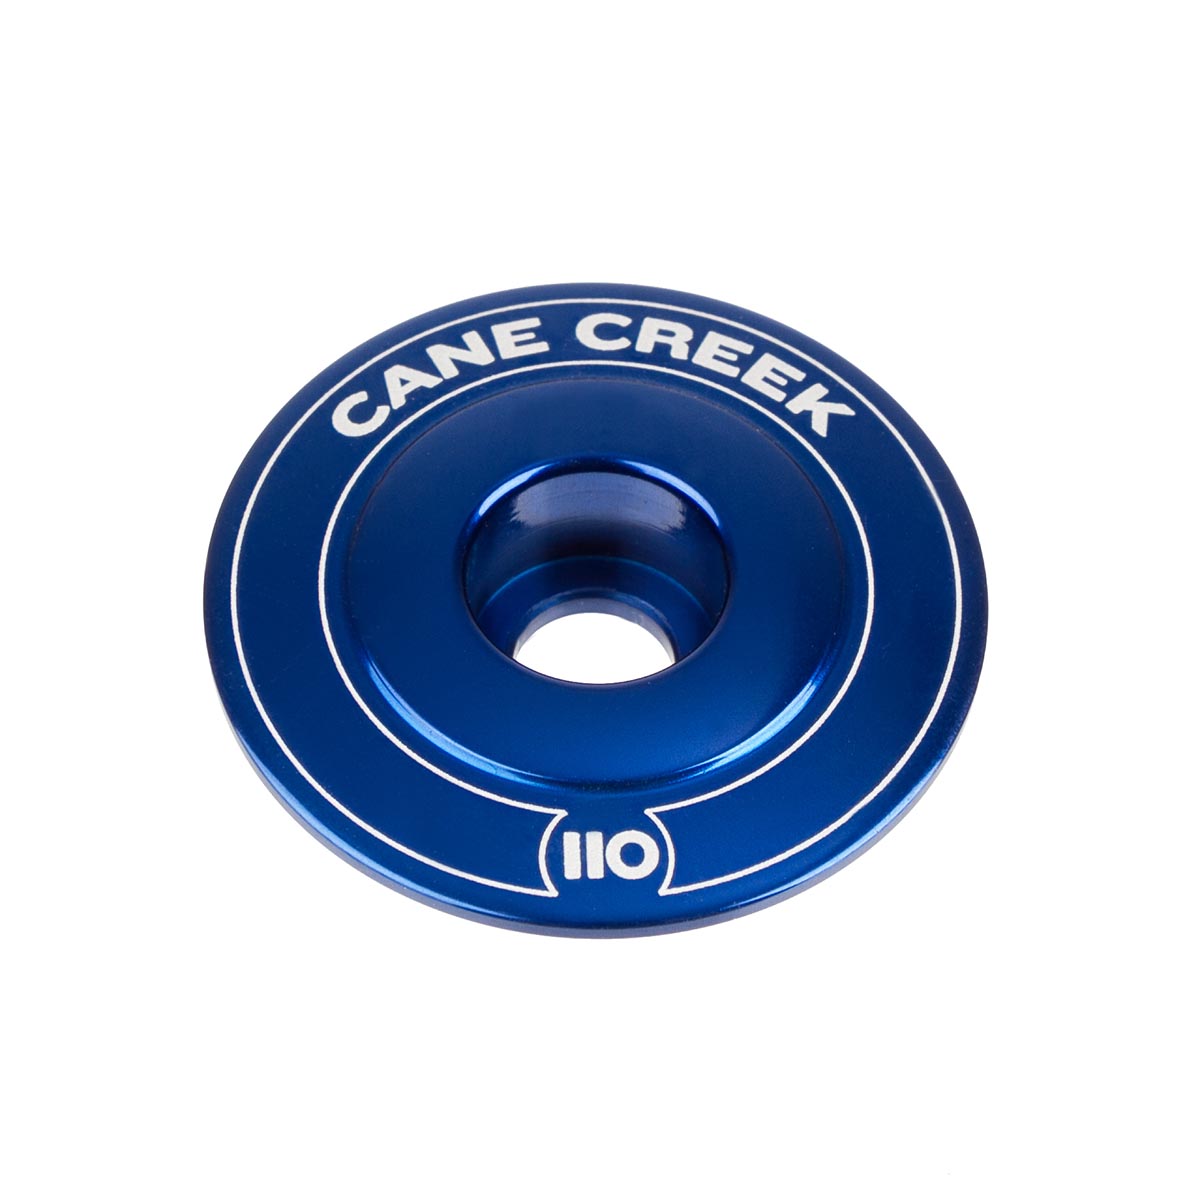 Cane Creek Ahead Kappe 110 Blau, Aluminium, 1 1/8 Zoll